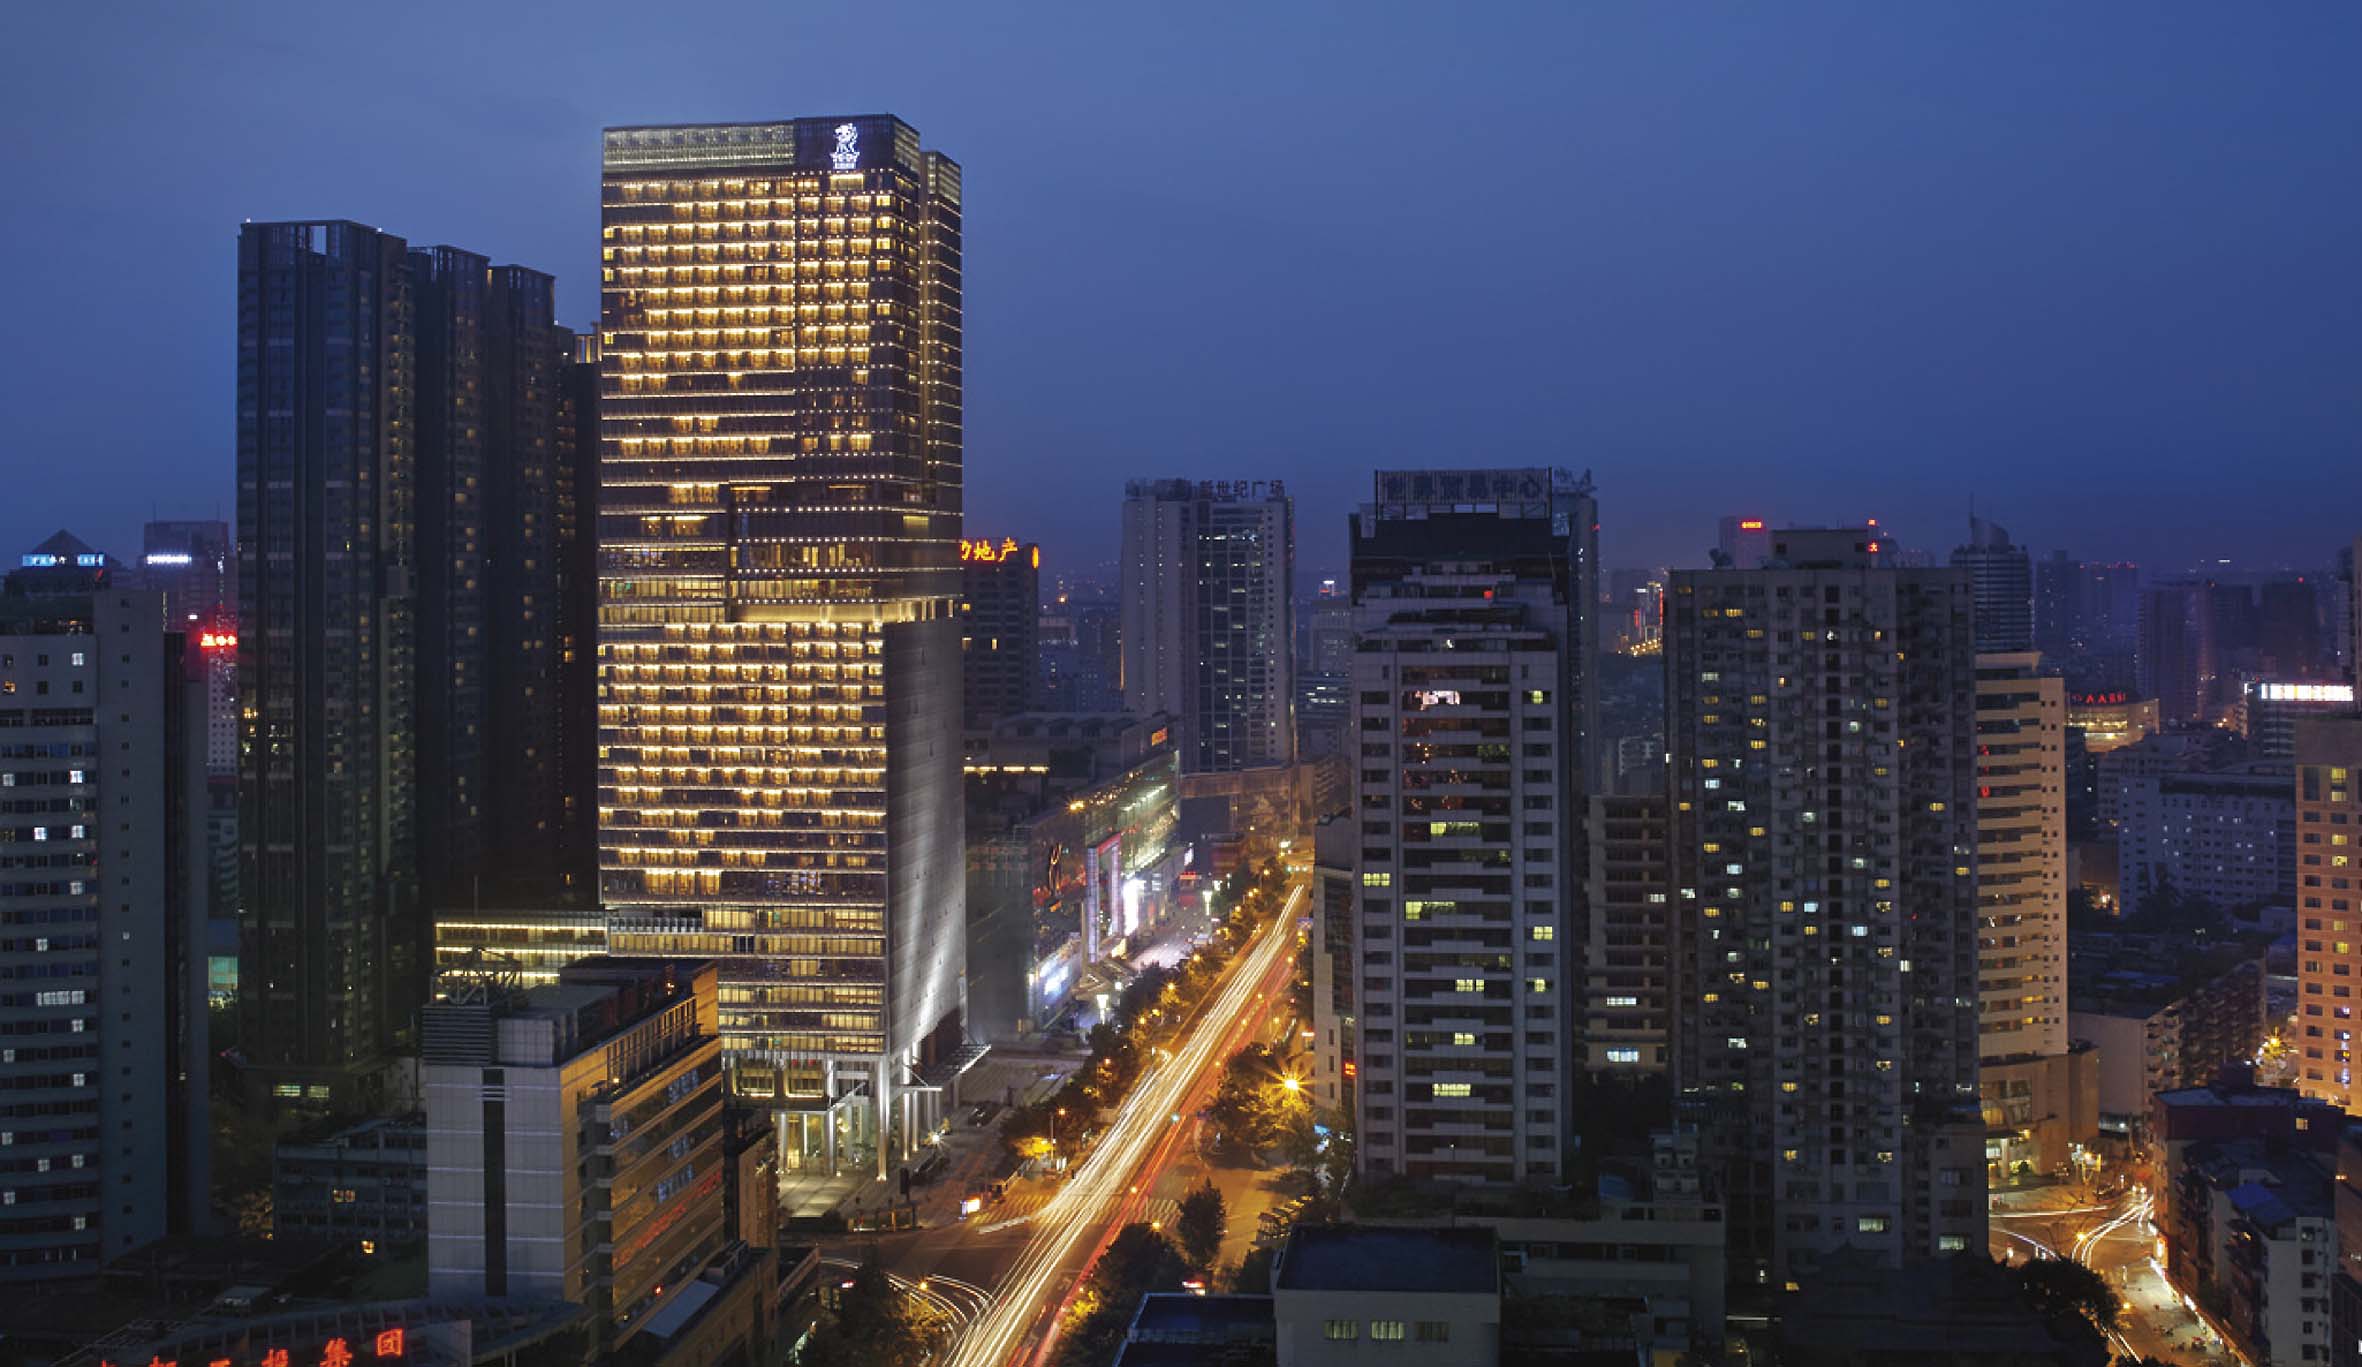 Chengdu skyscrapers